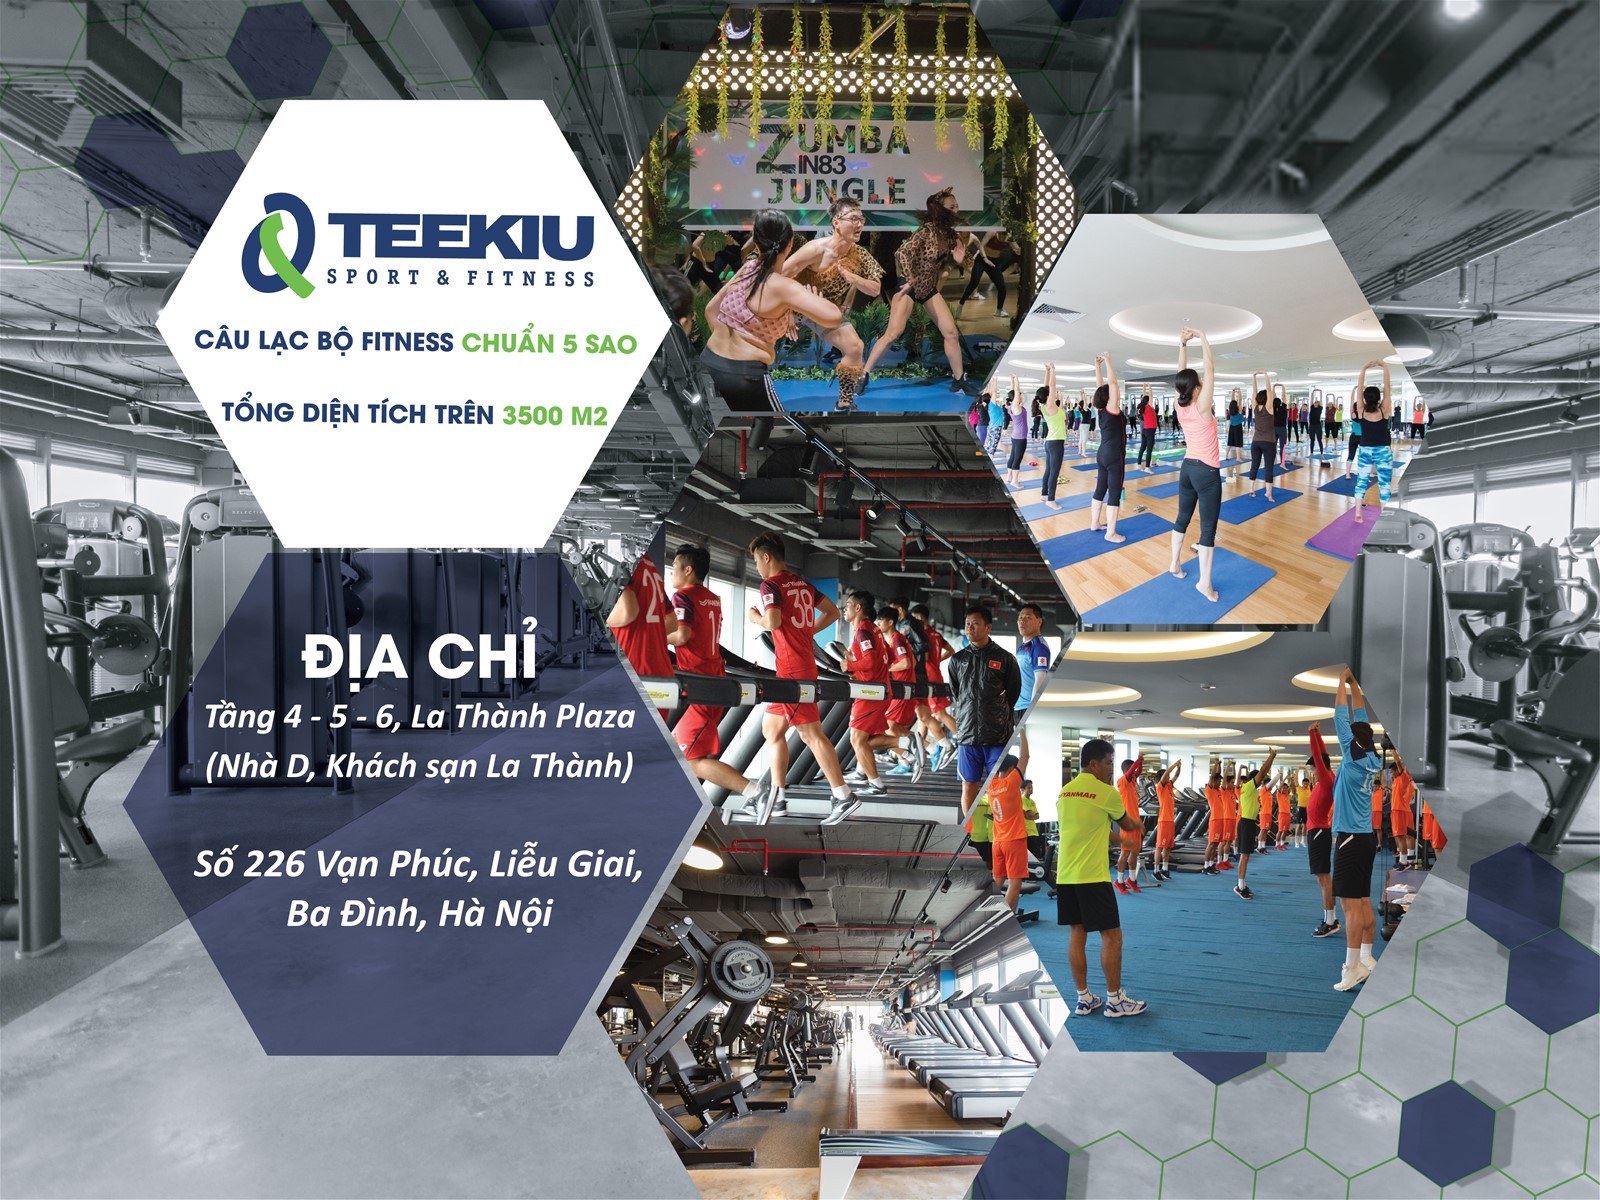 Teekiu Sport & Fitness Accompanies Halong Bay Heritage Marathon 2020